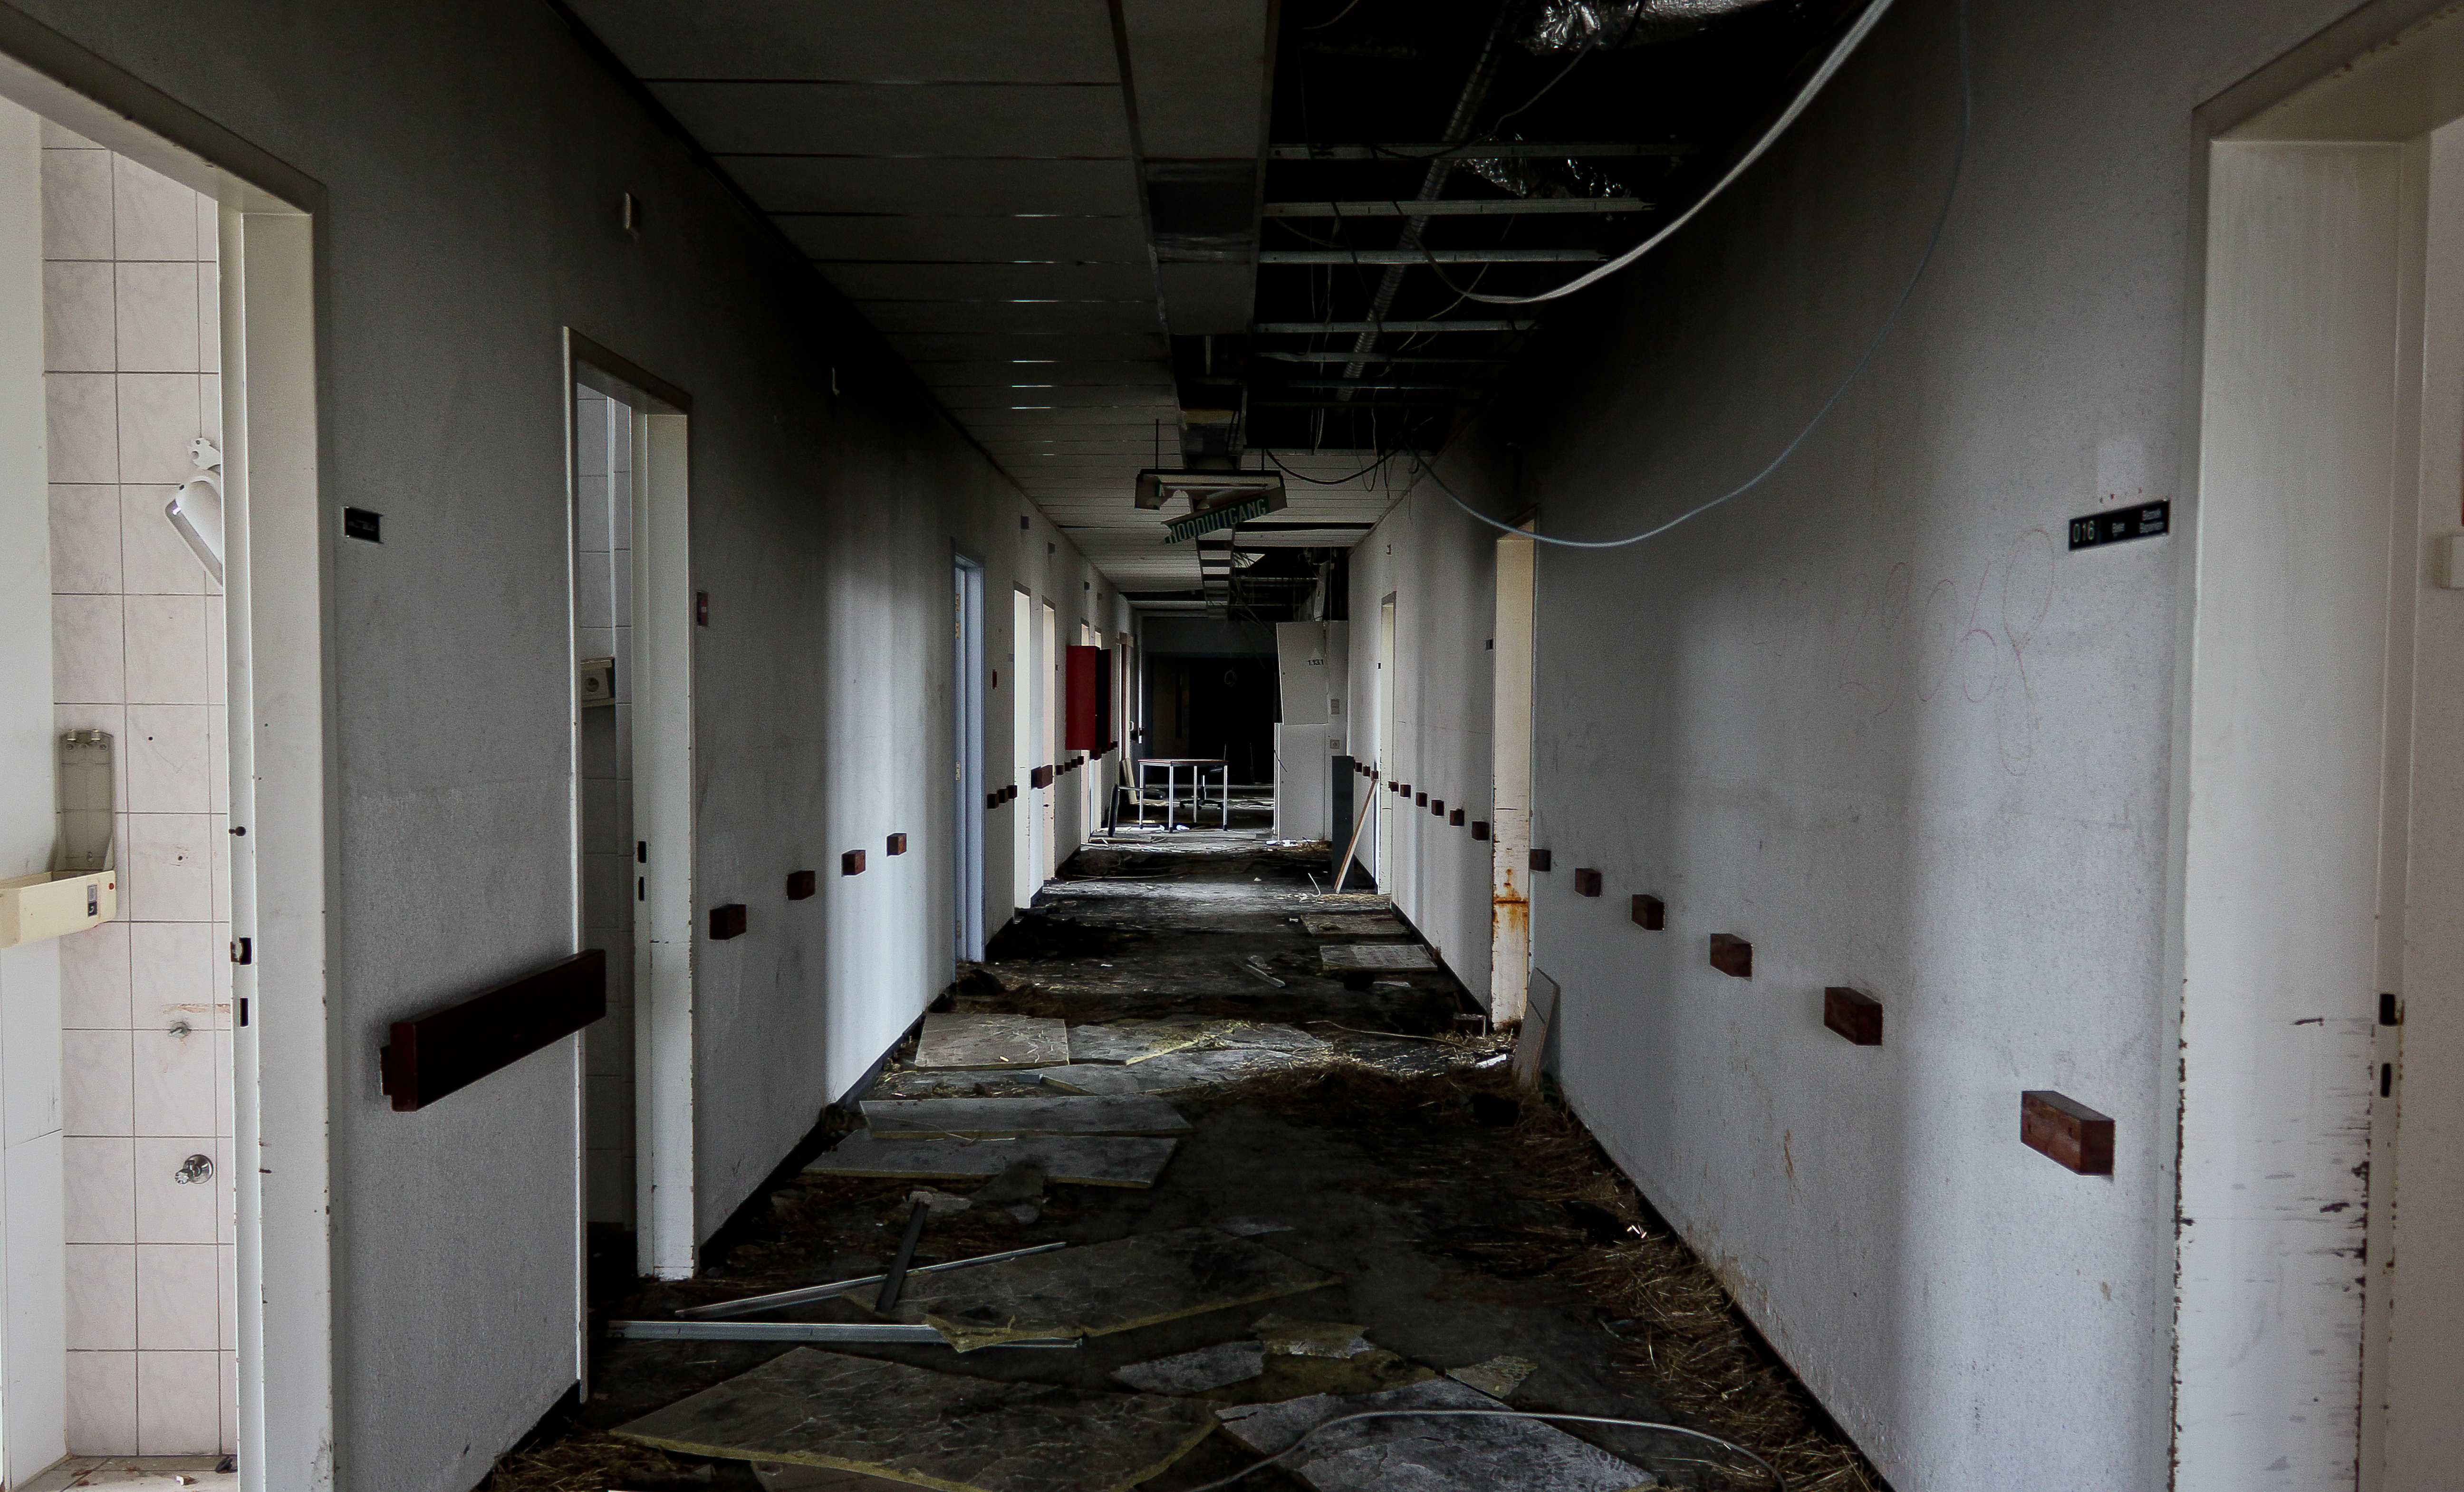 Abandoned Hospital Long Hallway by Sylerr on DeviantArt